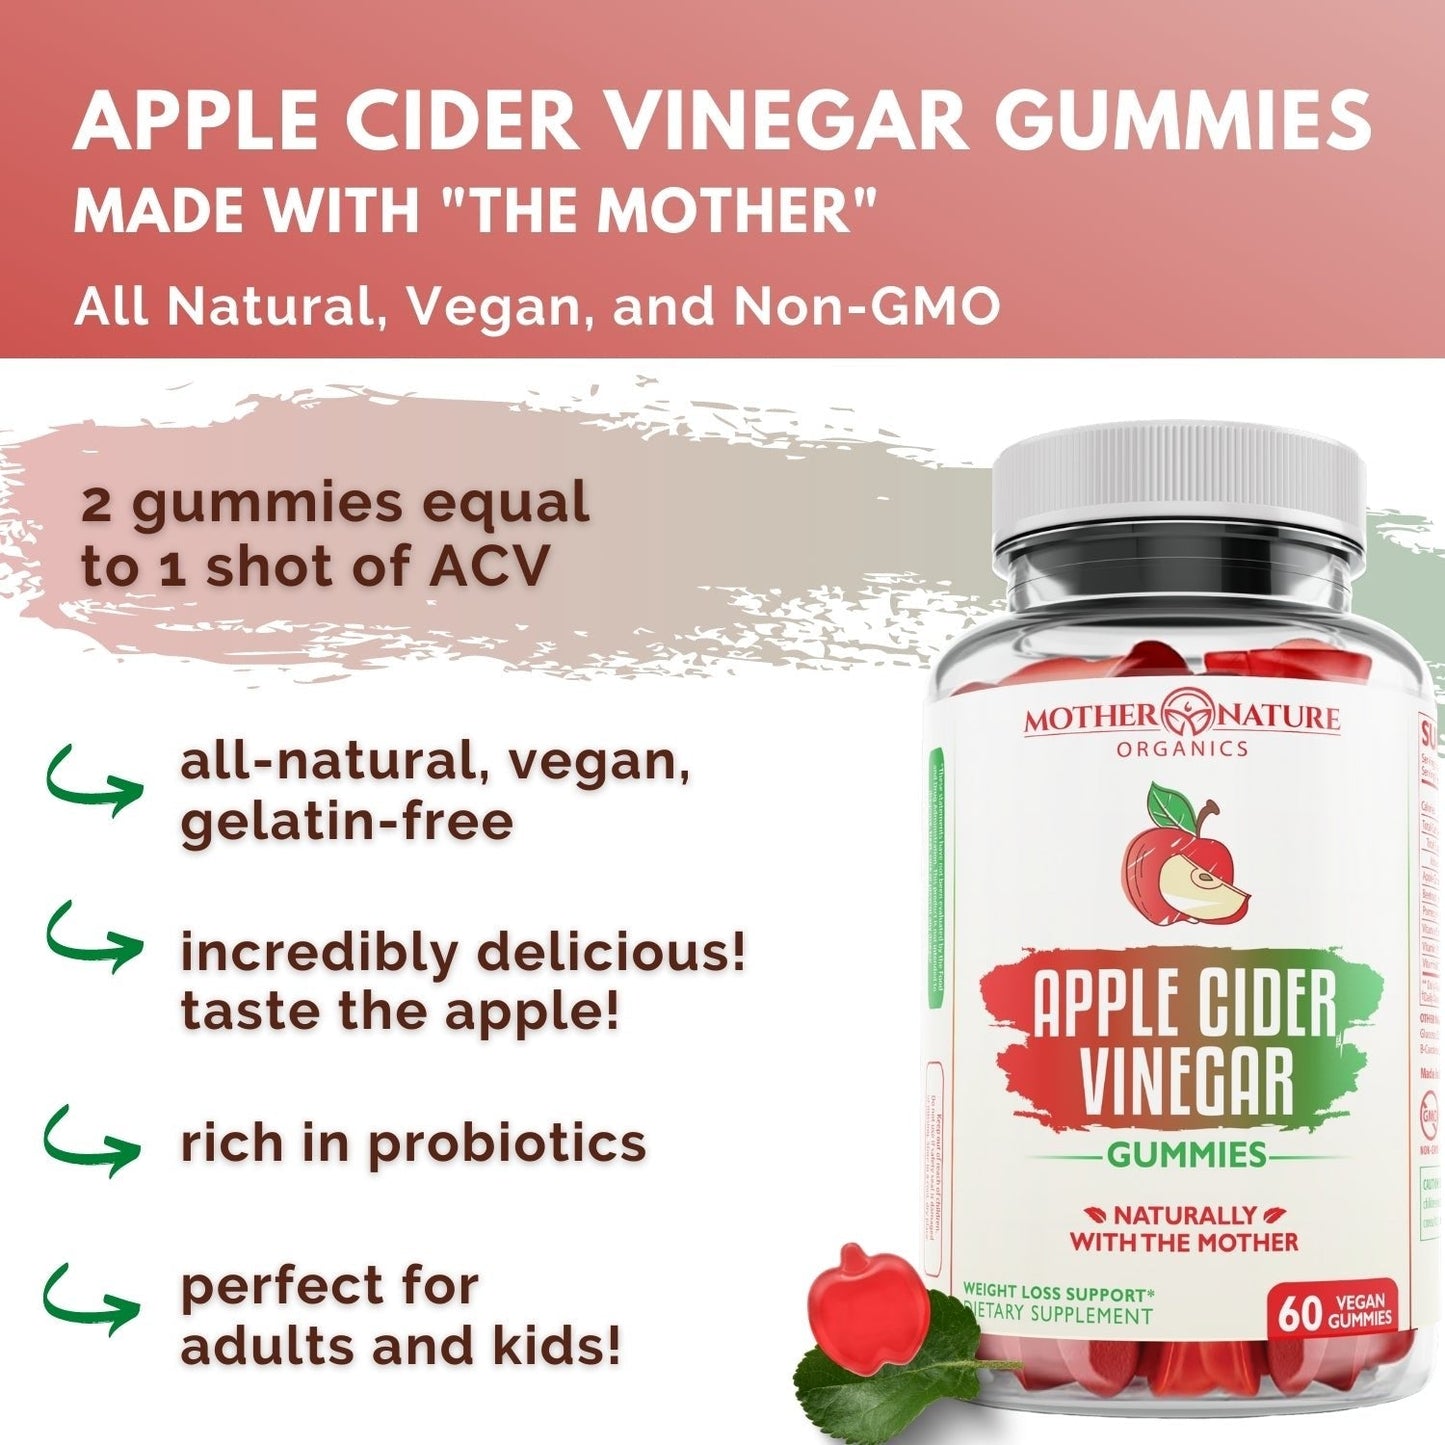 Apple Cider Vinegar Gummies by Mother Nature Organics